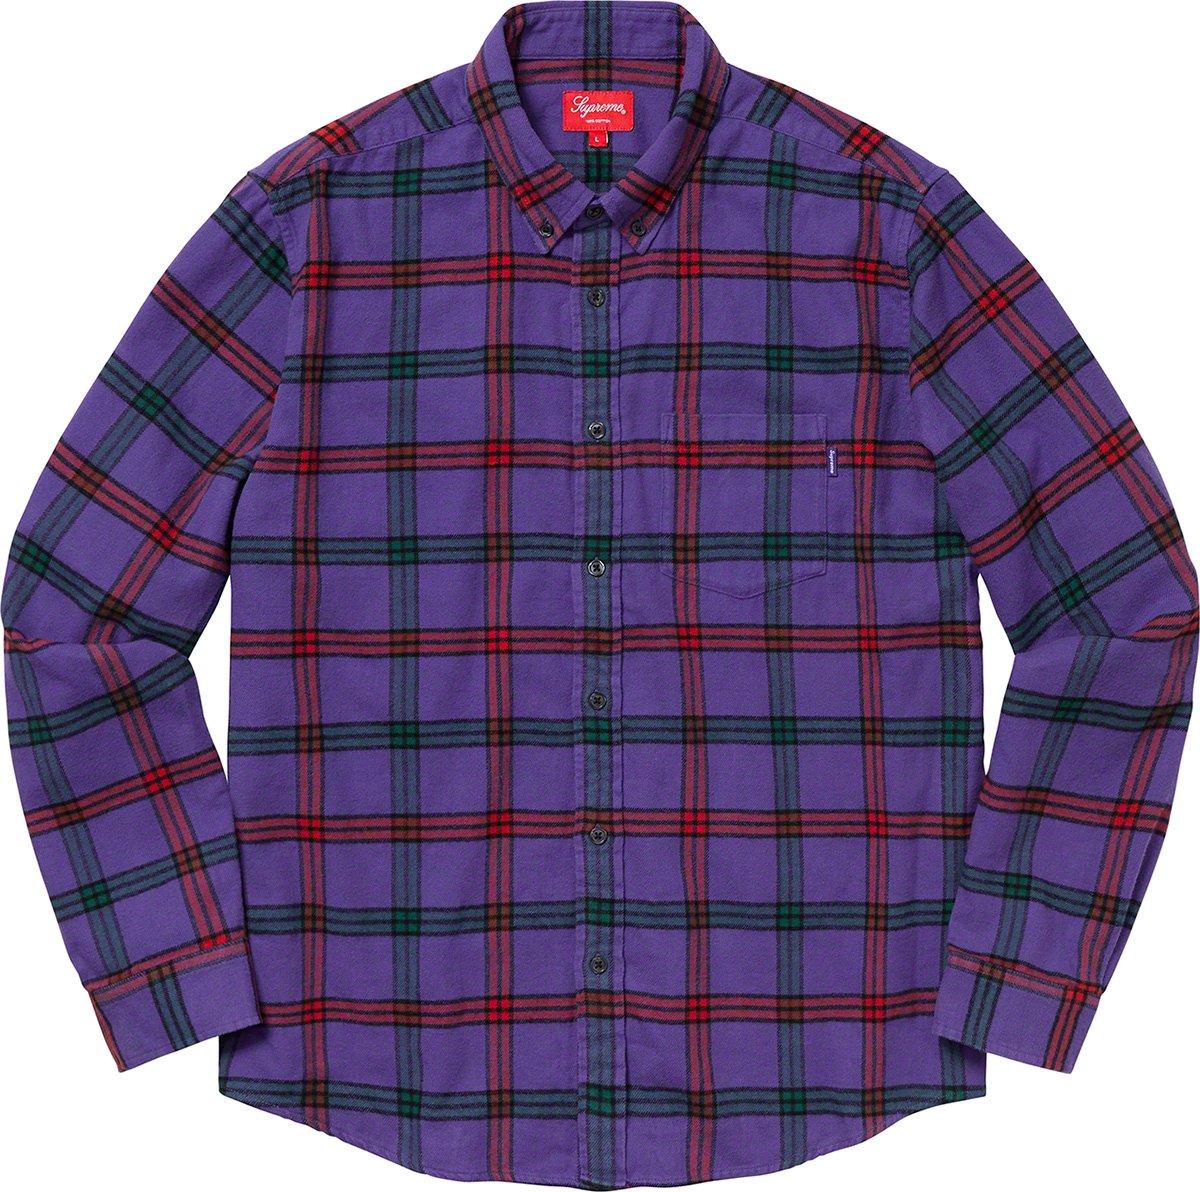 Tartan Flannel Shirt - fall winter 2019 - Supreme